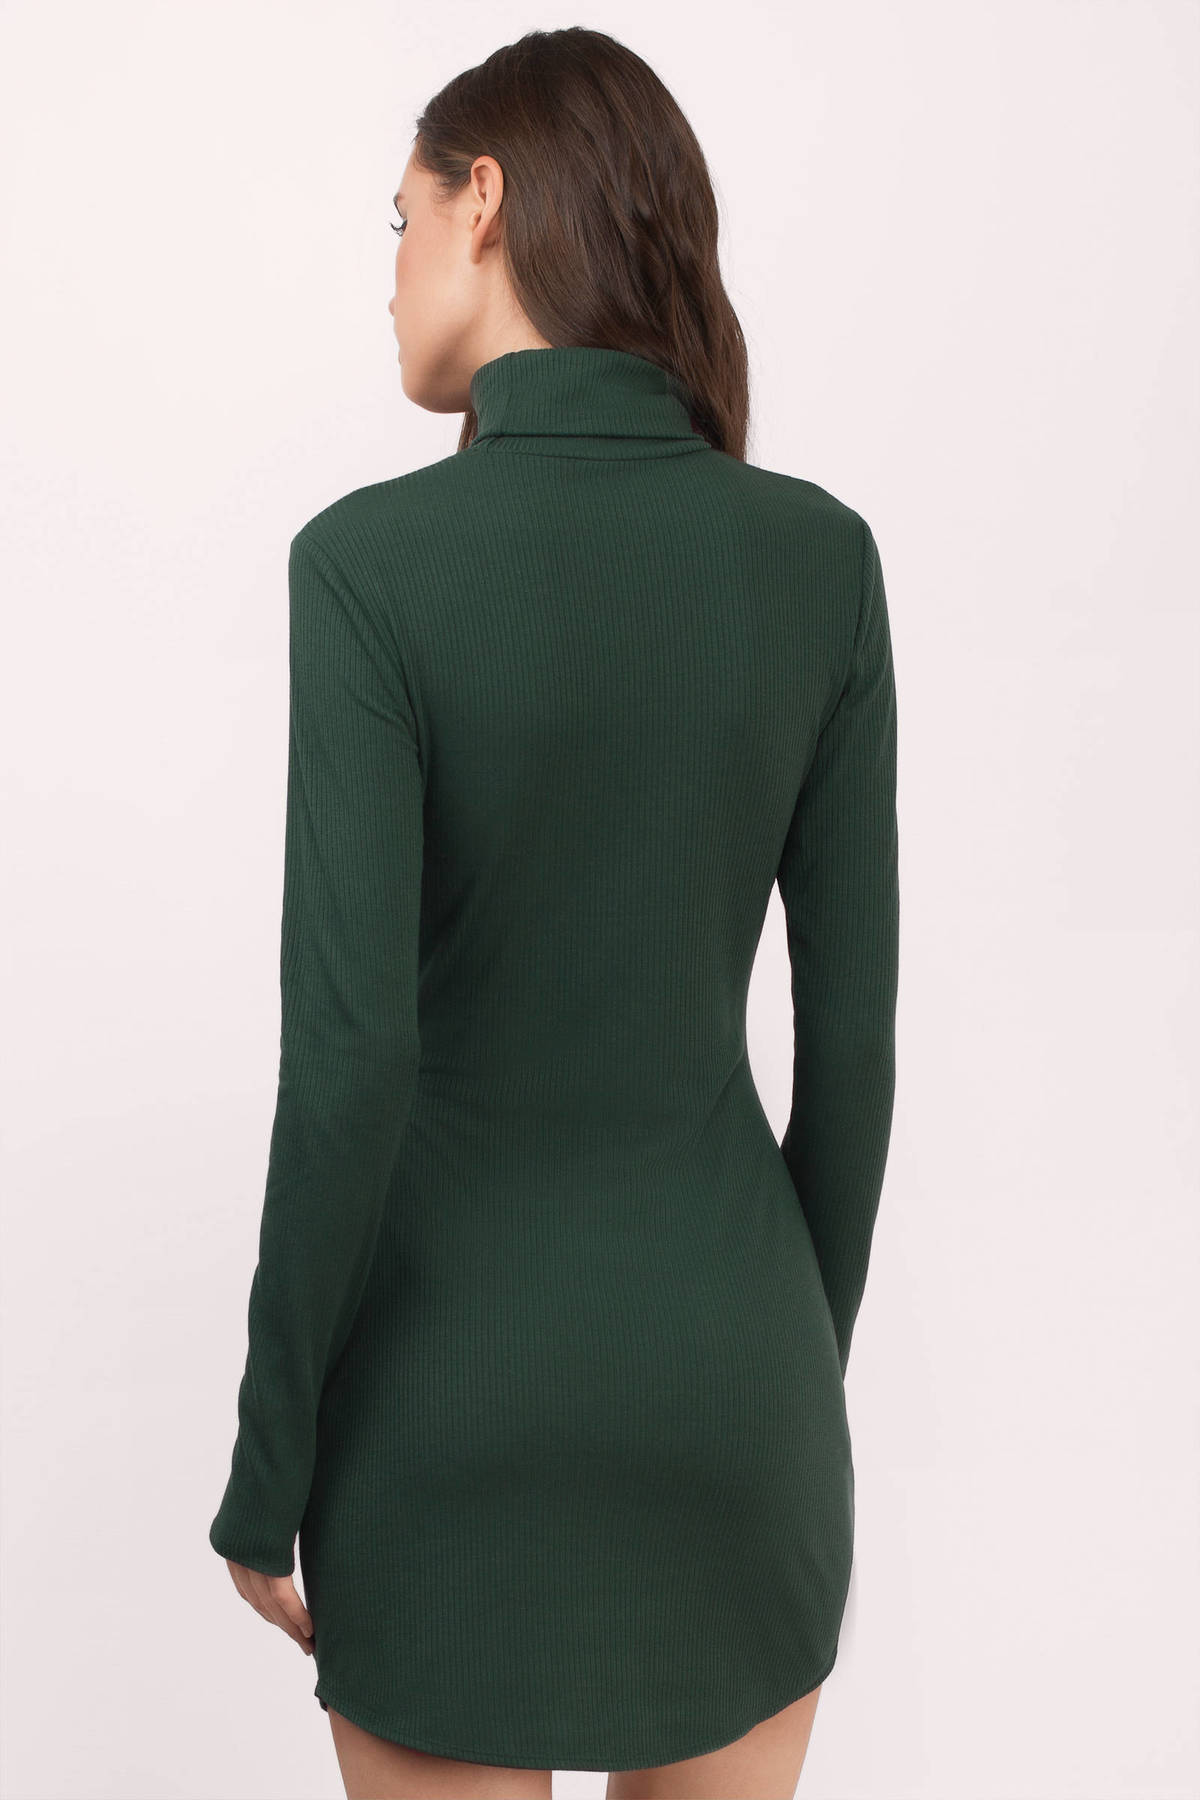 Cute Green Bodycon Dress Turtleneck Dress Bodycon Dress